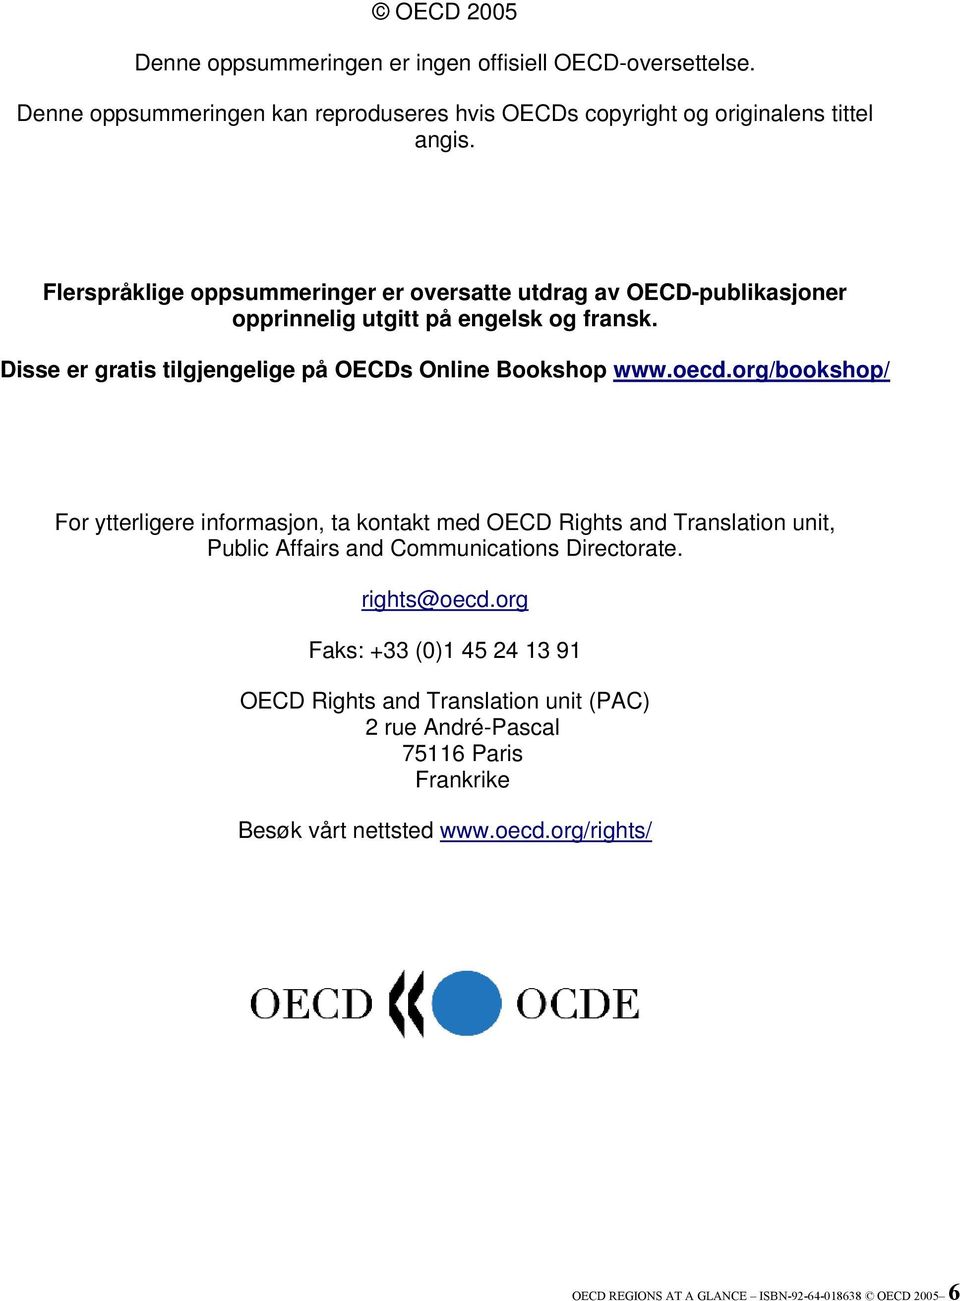 oecd.org/bookshop/ For ytterligere informasjon, ta kontakt med OECD Rights and Translation unit, Public Affairs and Communications Directorate. rights@oecd.